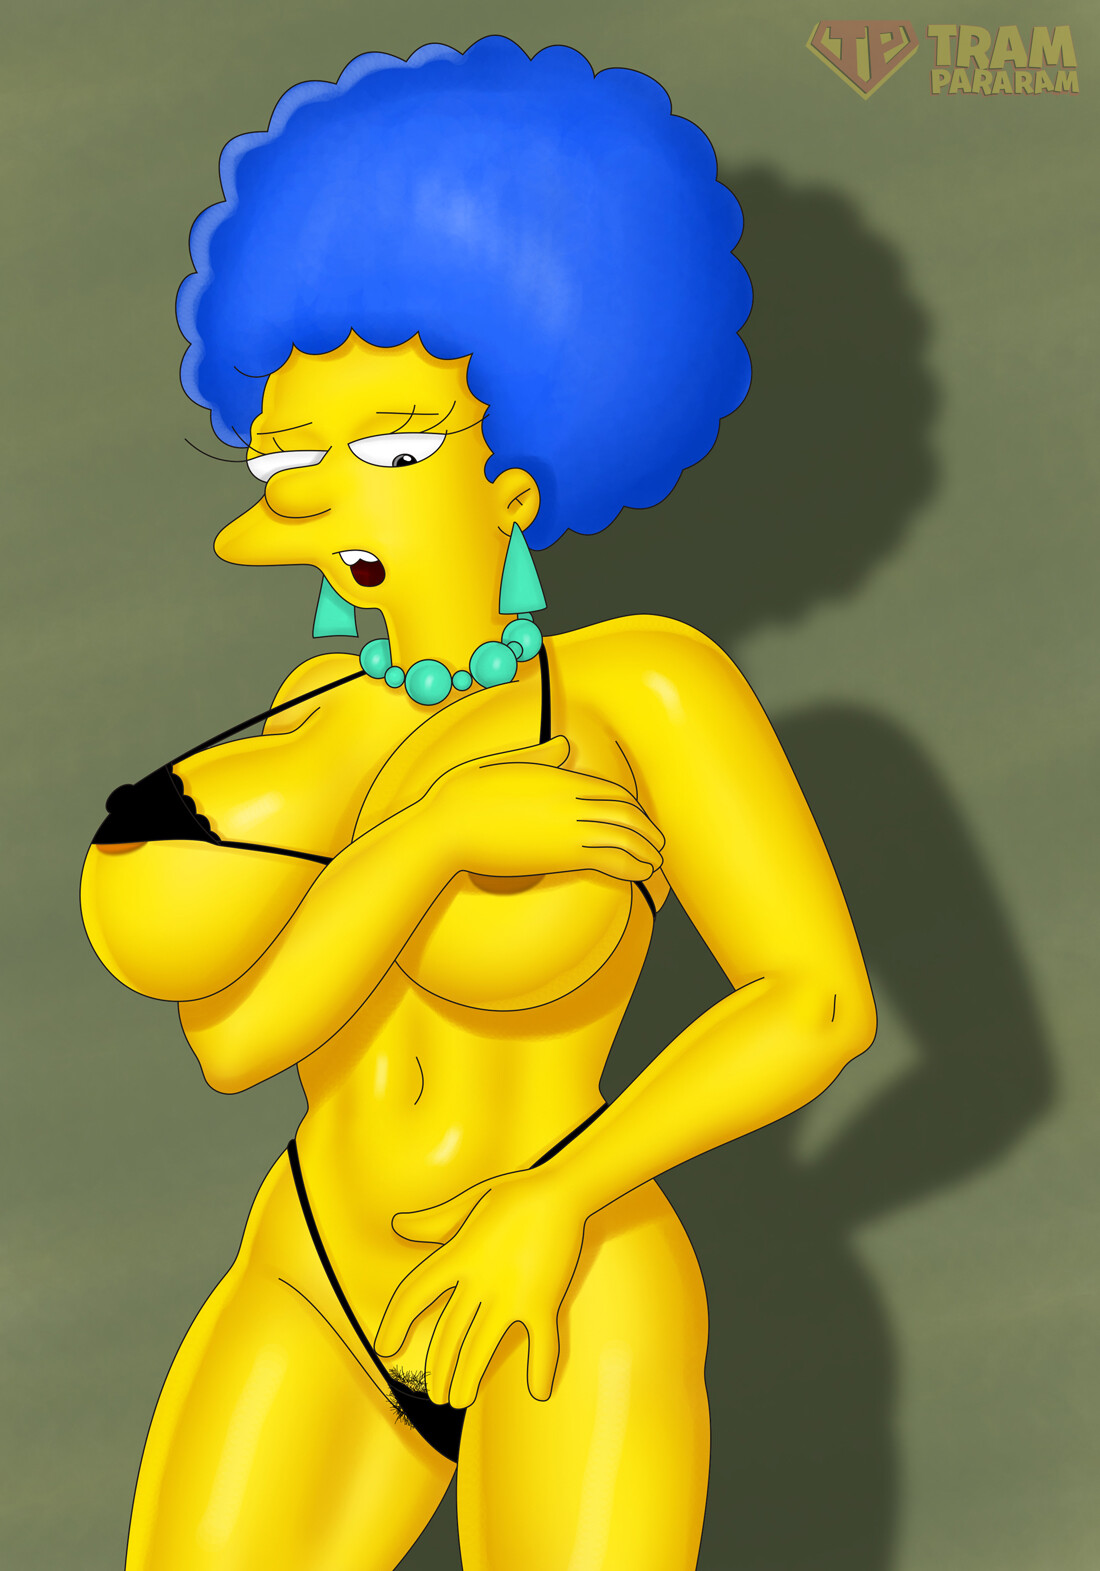 Yellow MILF with big tits in hot cartoon - Tram Pararam XXX.